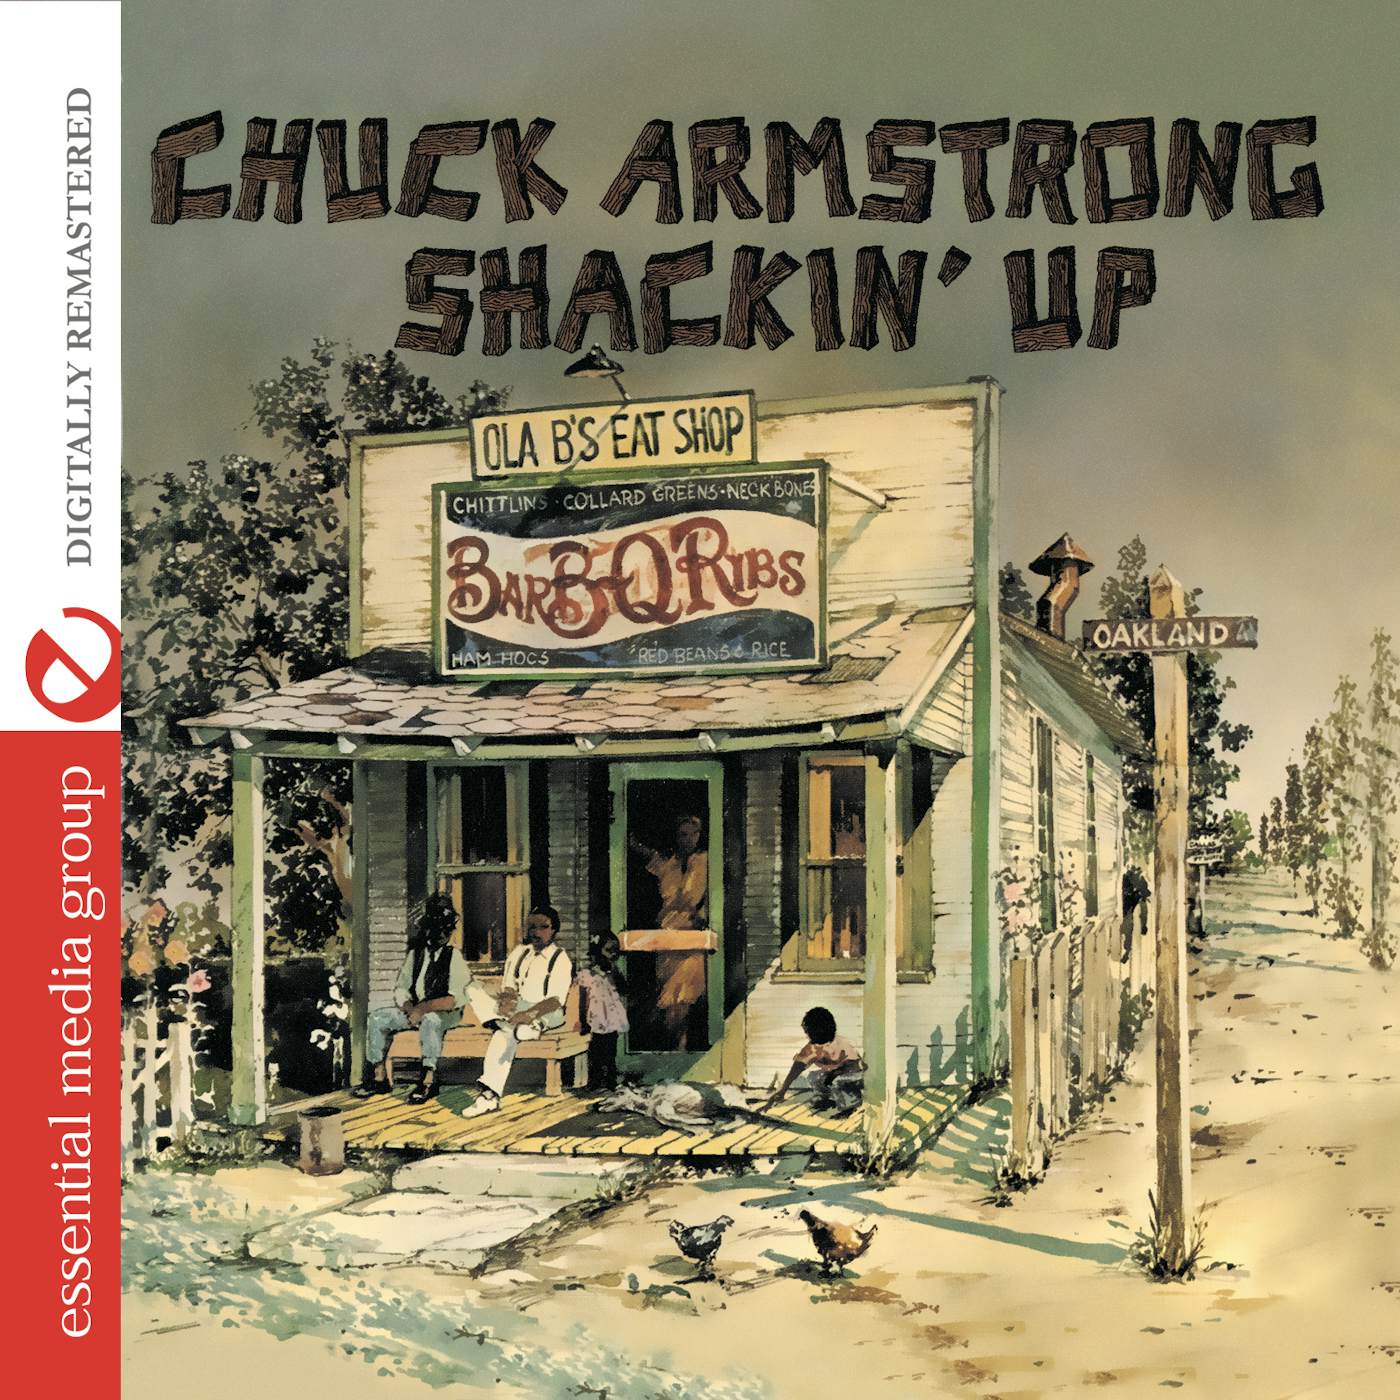 Chuck Armstrong SHACKIN UP CD